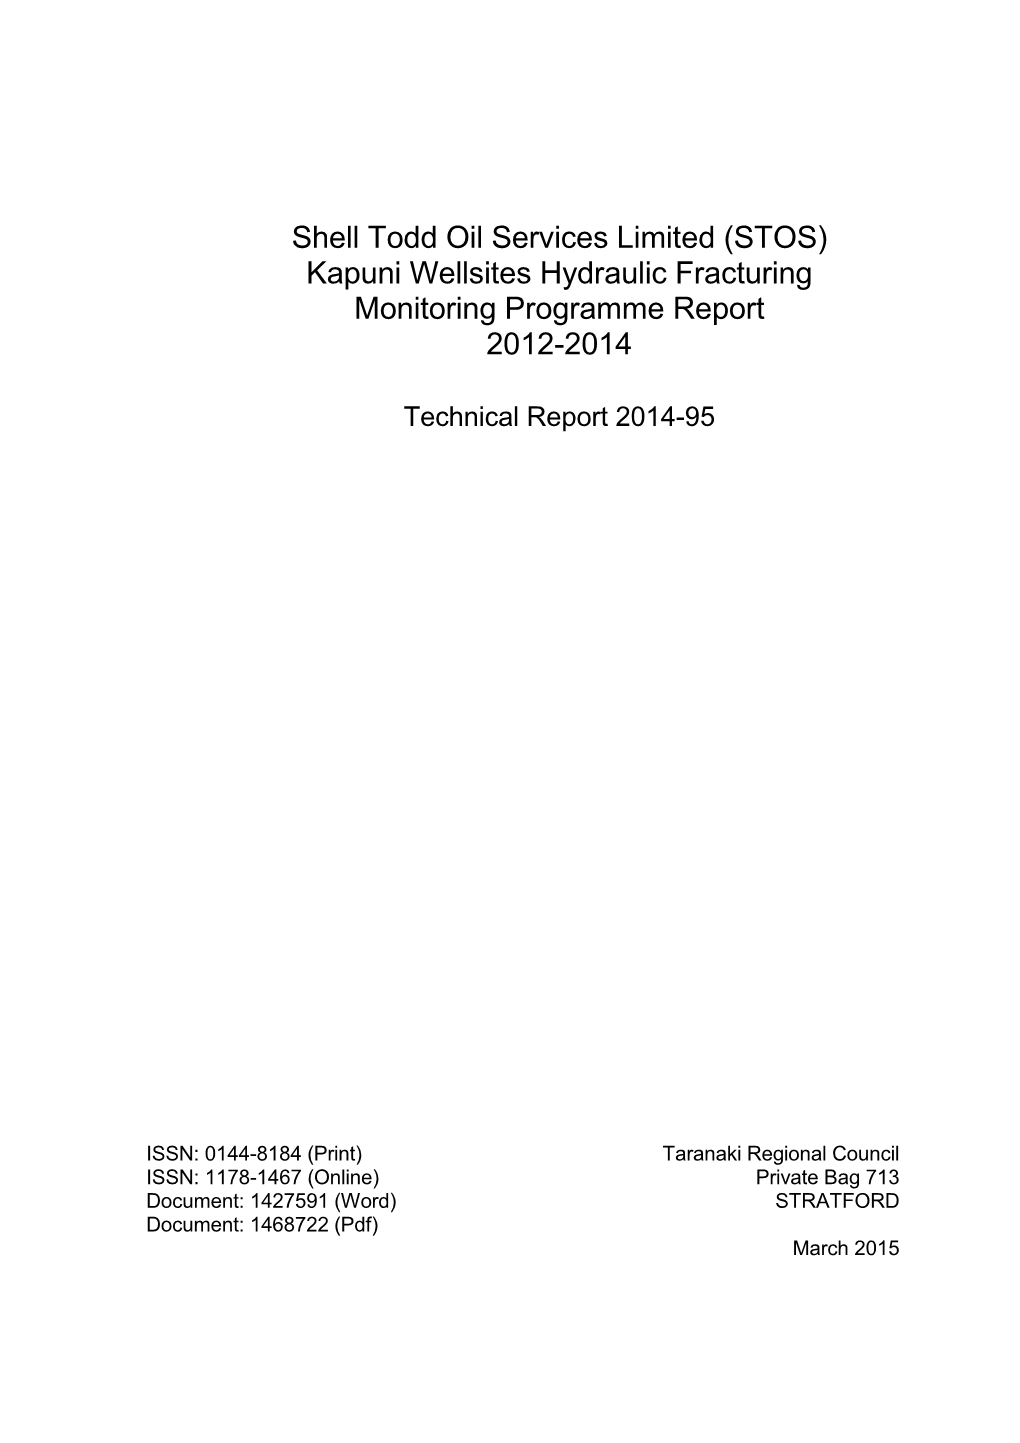 STOS Kapuni Wellsites Hydraulic Fracturing Monitoring Report